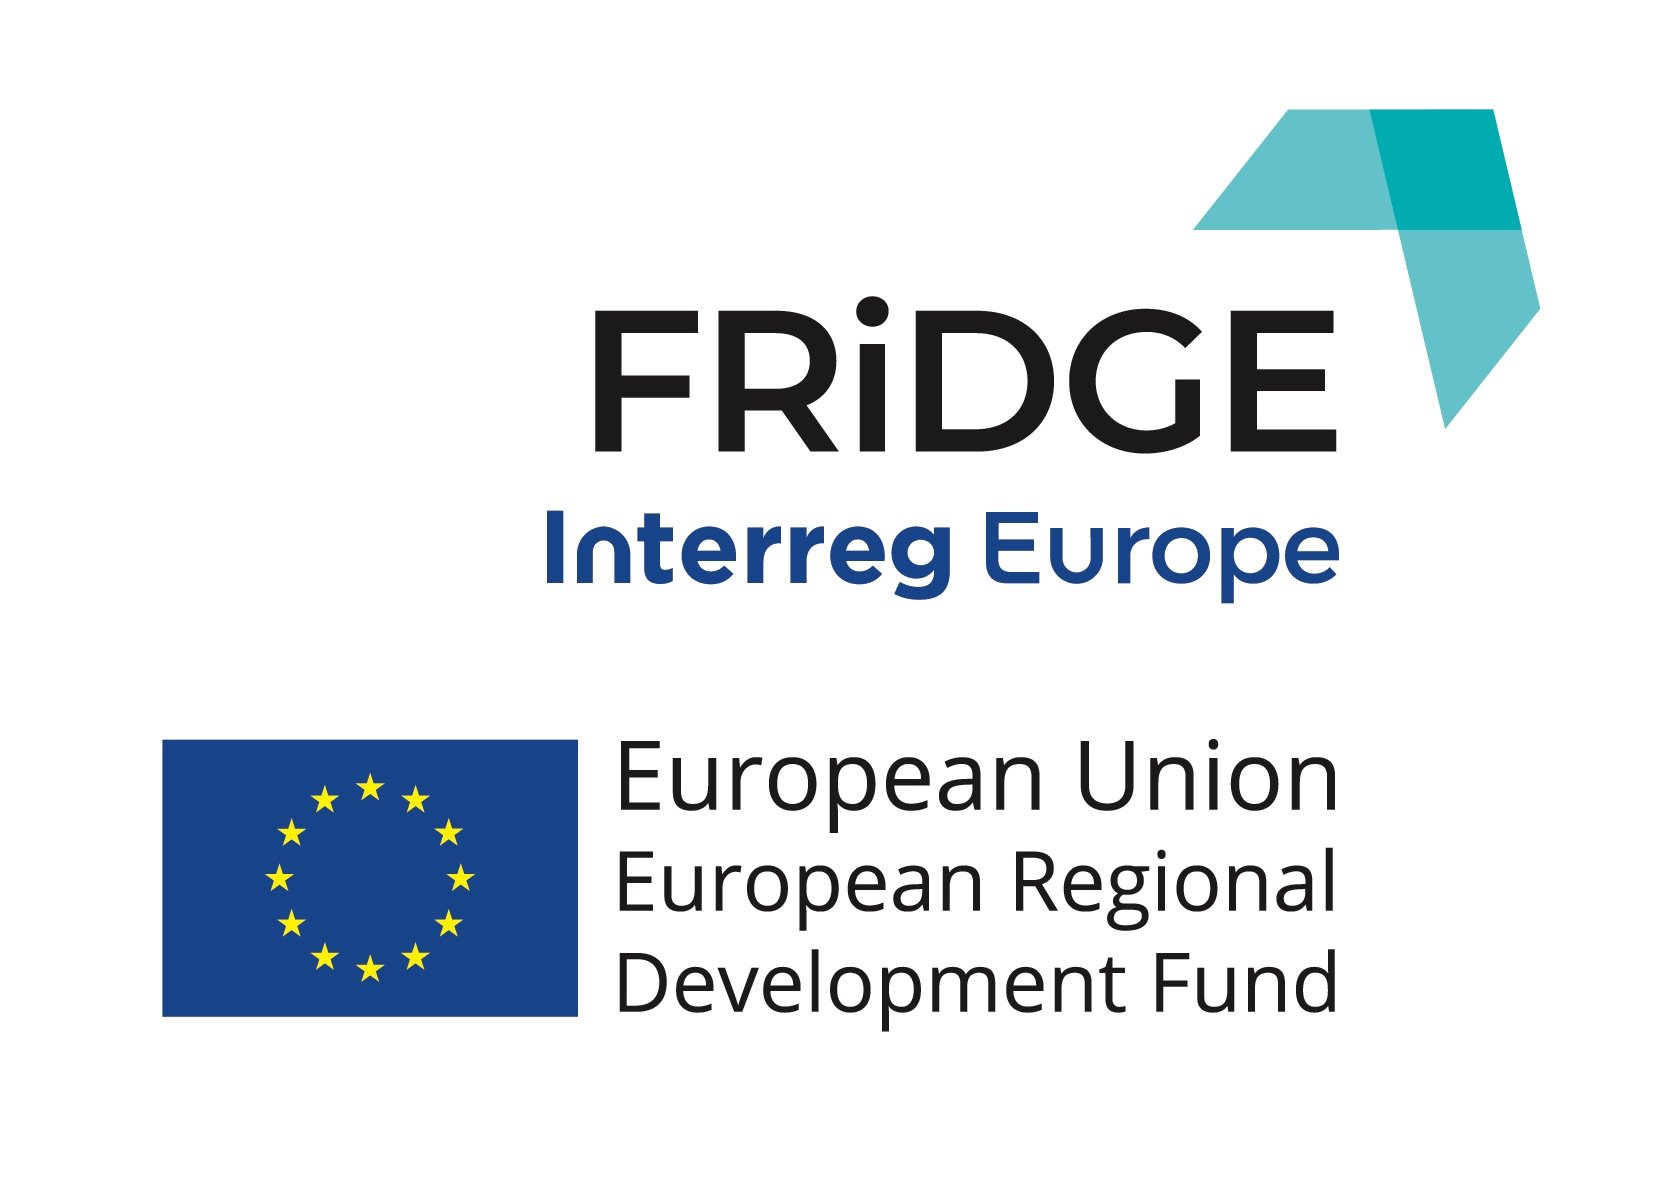 Interreg FRIDGE